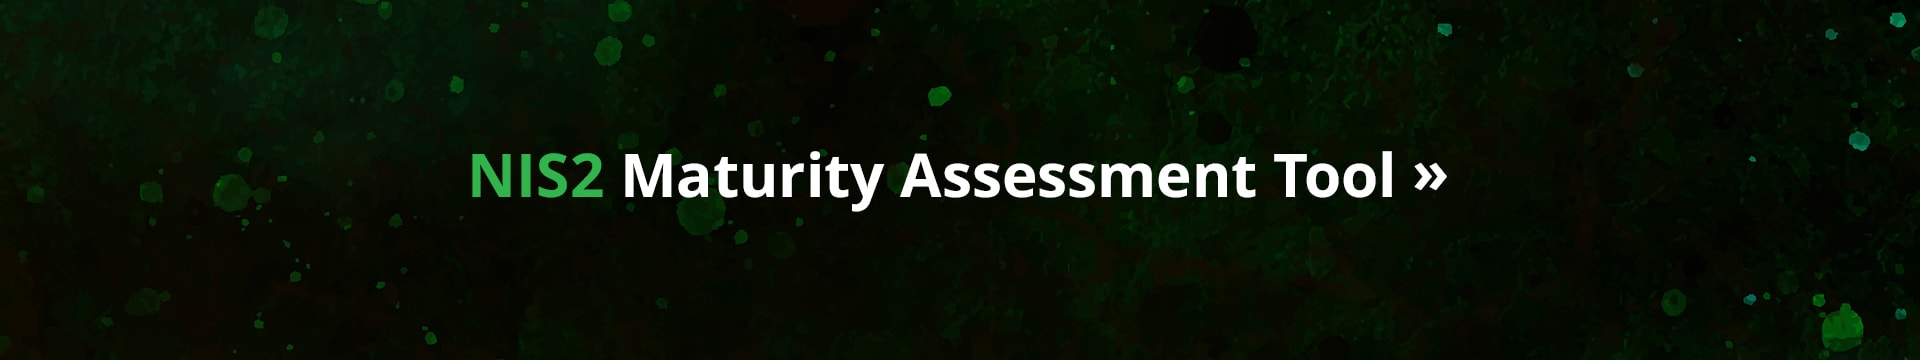 NIS2 Maturity Assessment Tool